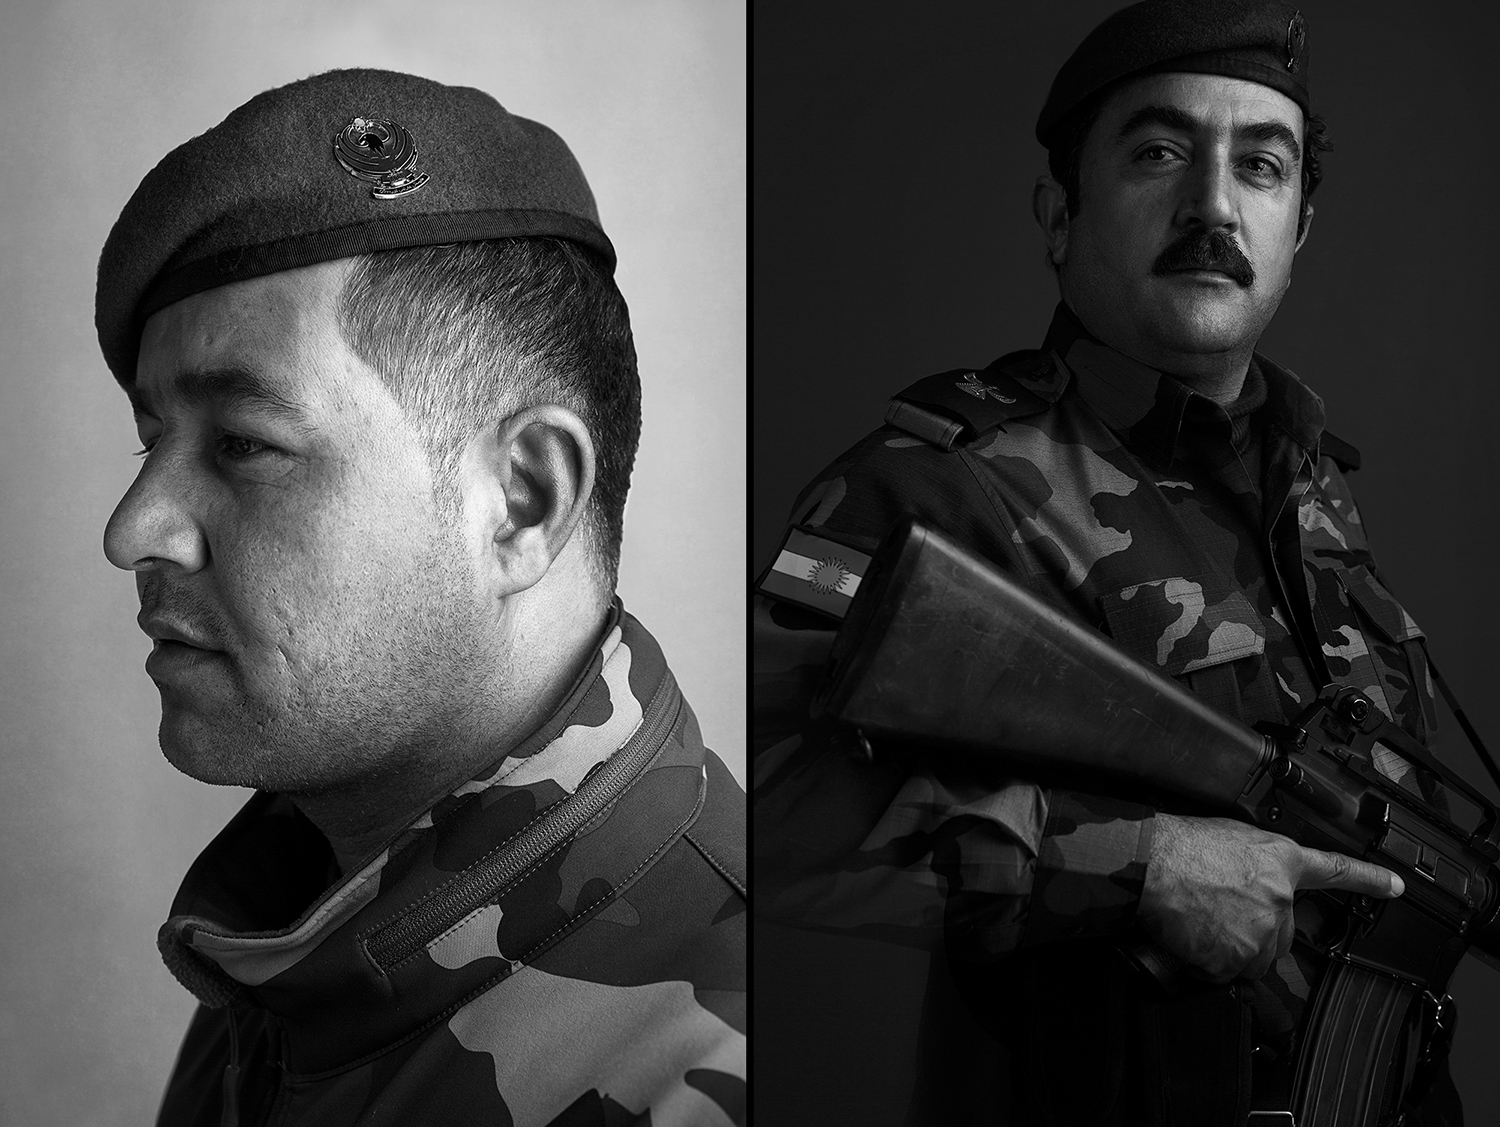 Portraits of two Peshmerga soldiers